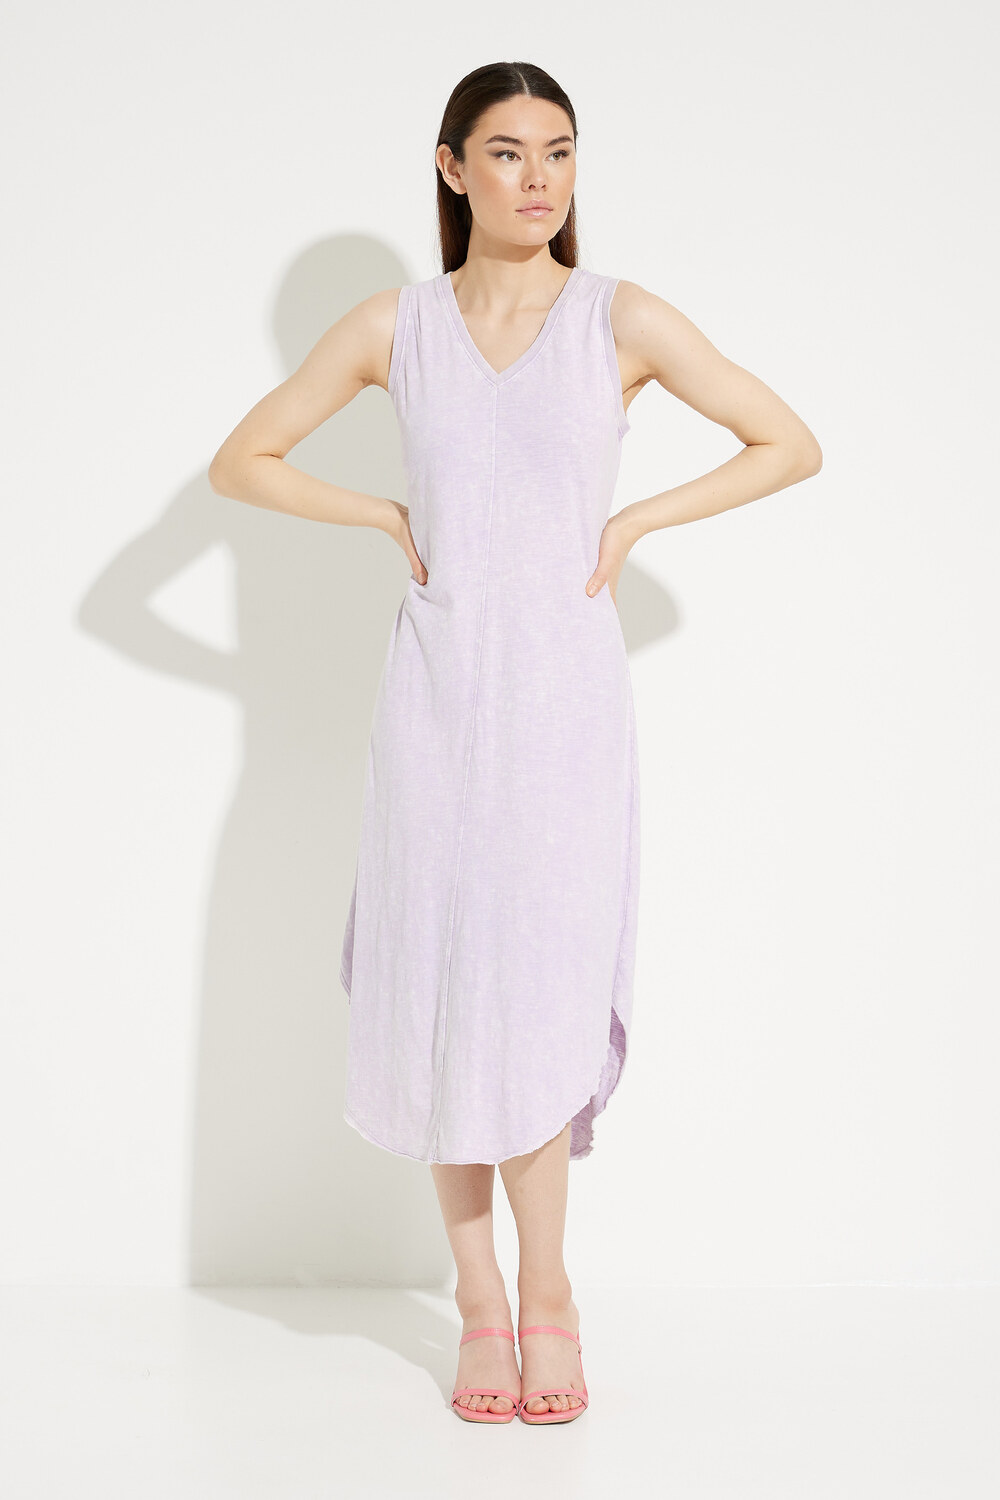 Printed Cotton Dress Style C3125PR. Iris